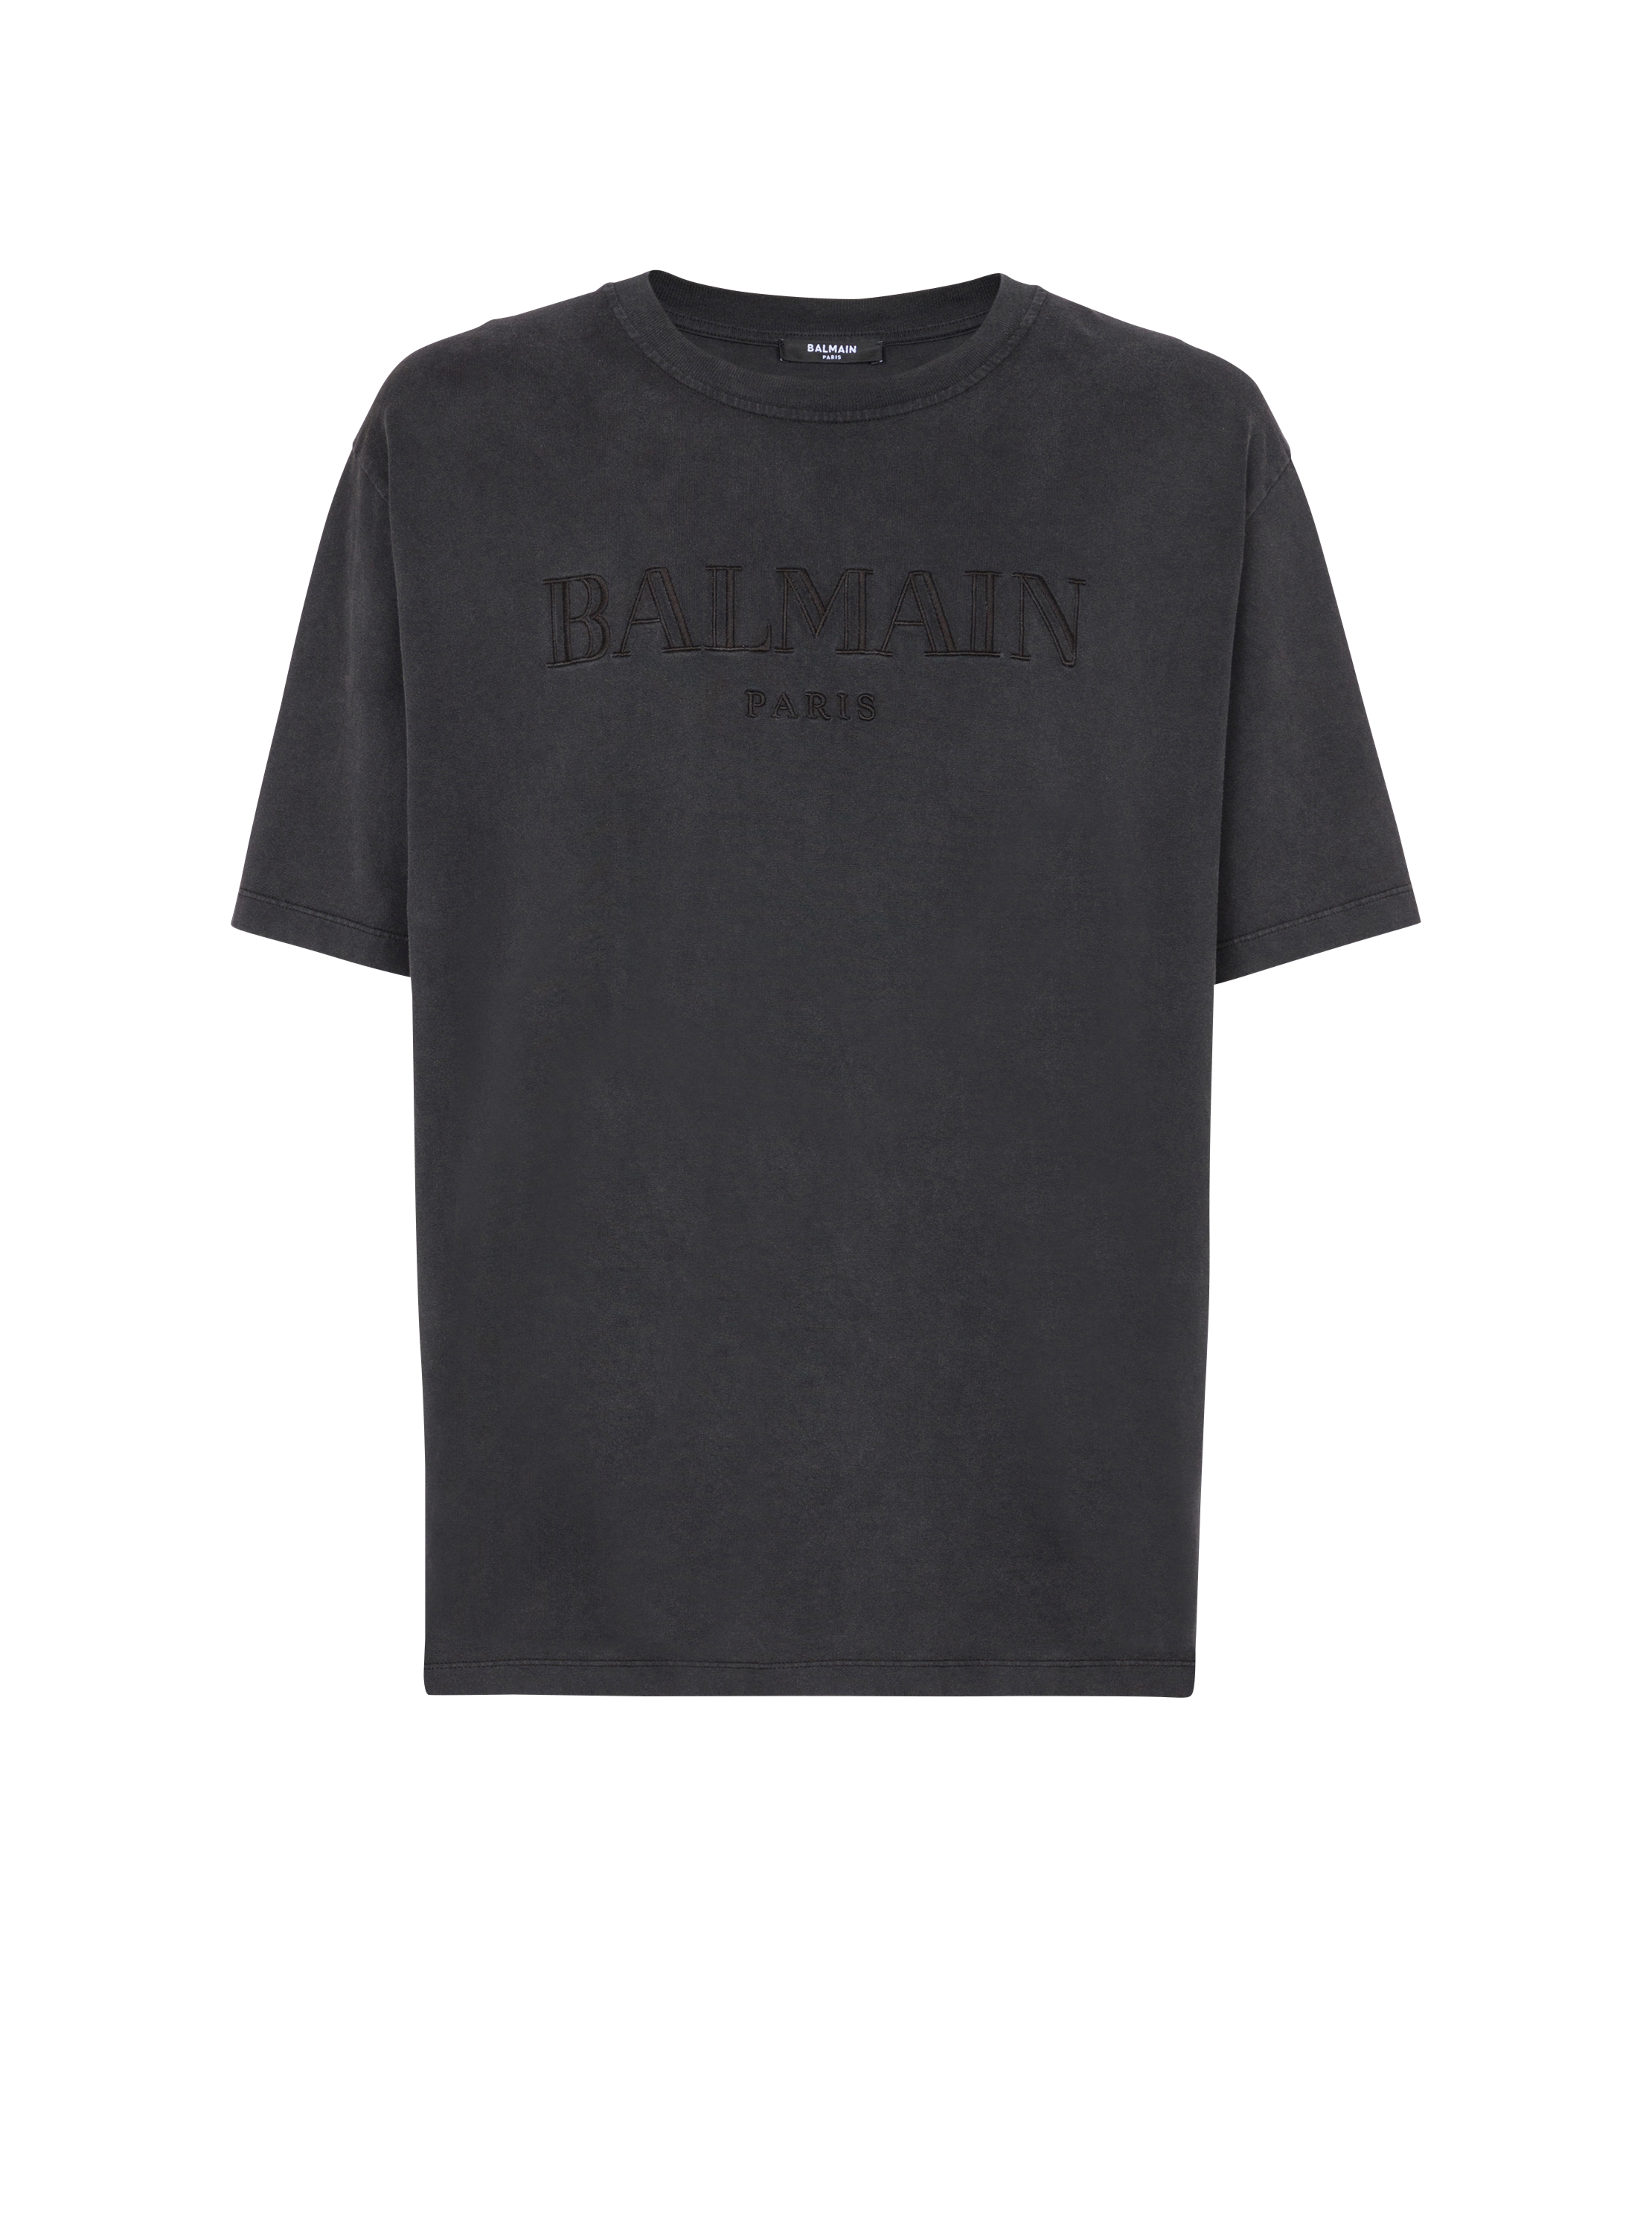 Vintage Balmain embroidered T-shirt, grey, hi-res